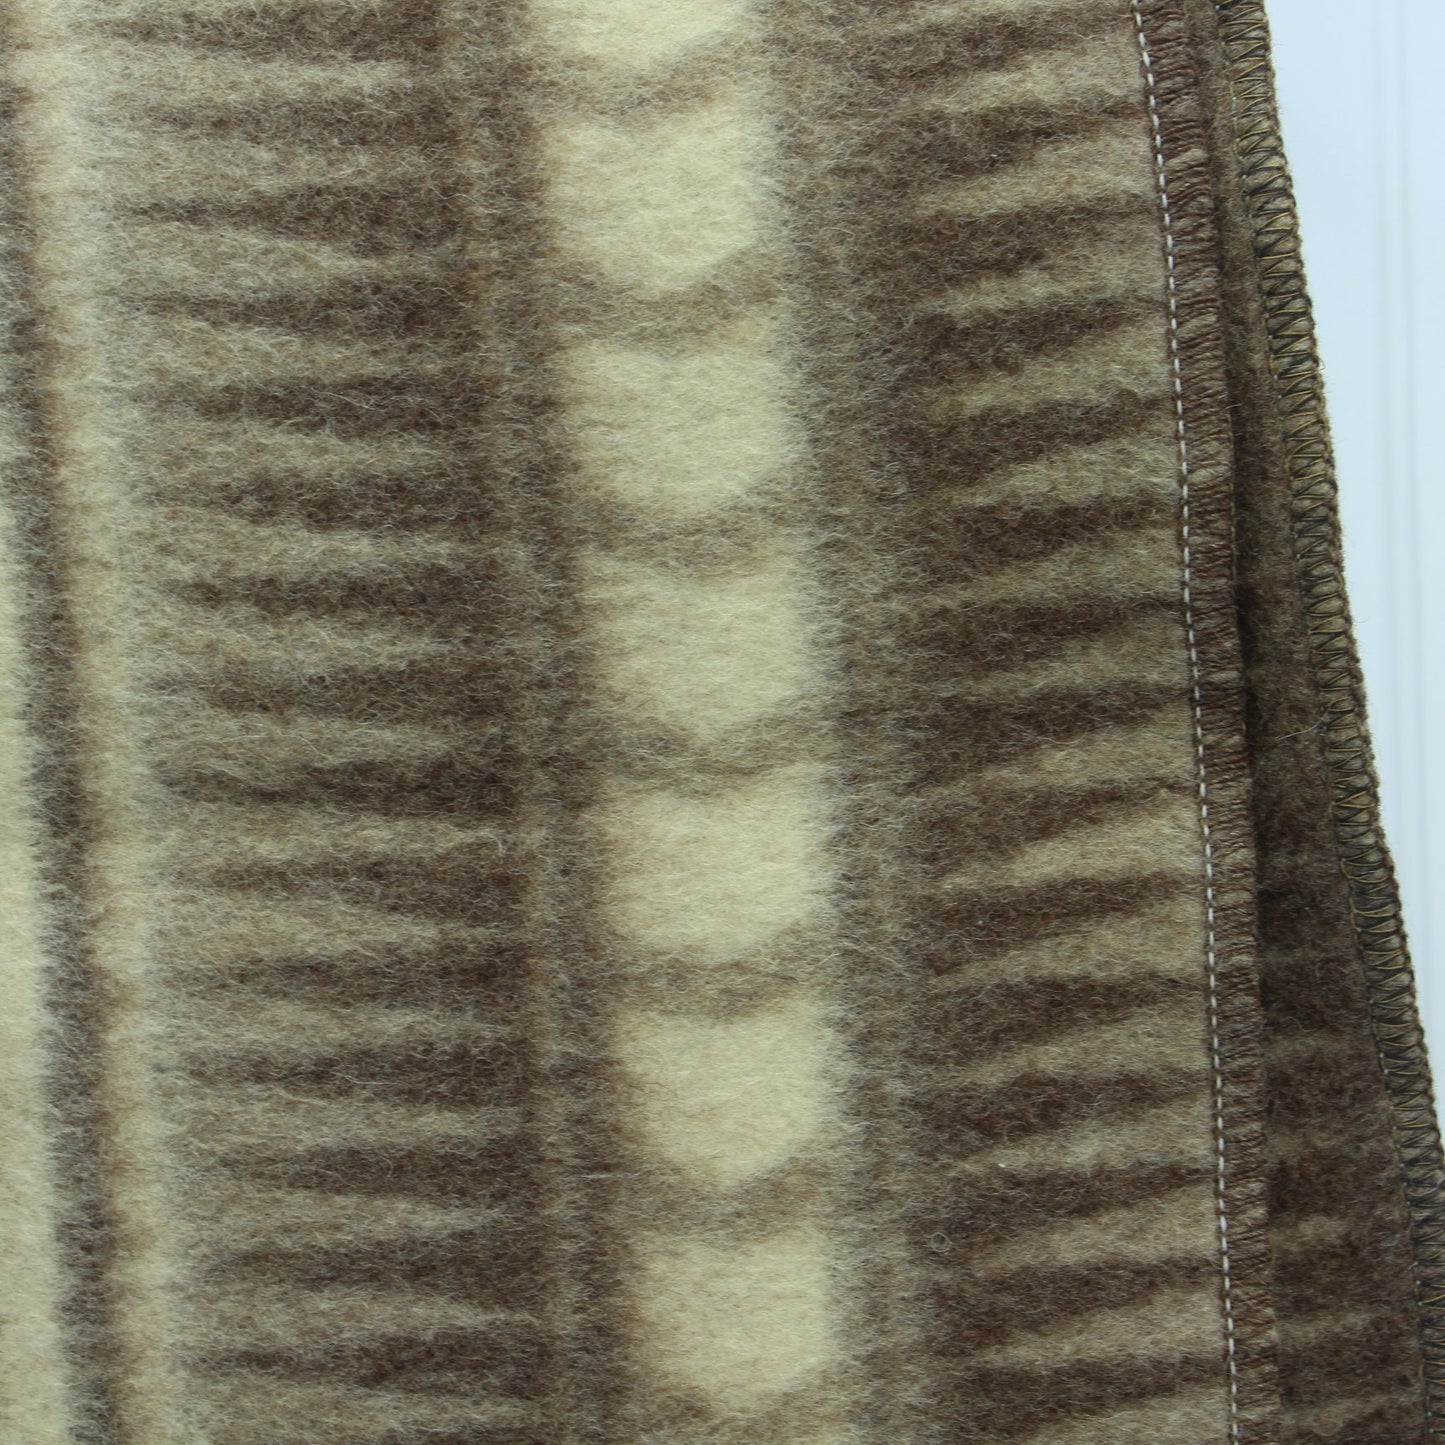 L L Bean Wool Cotton Blanket Ecuador Heavy Thick Lush Vintage closeup beautiful wool